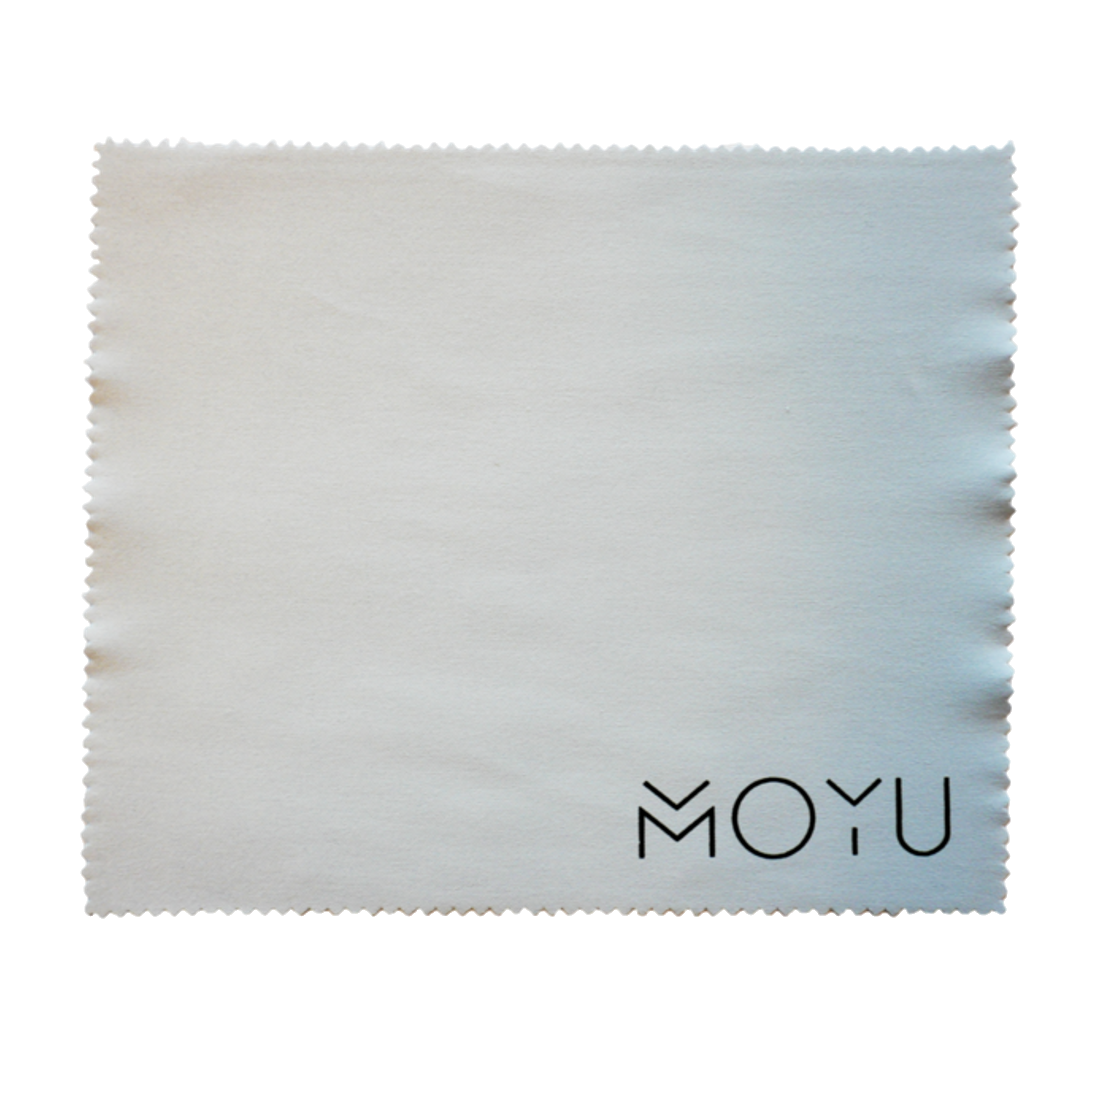 MOYU Cleaning Cloth